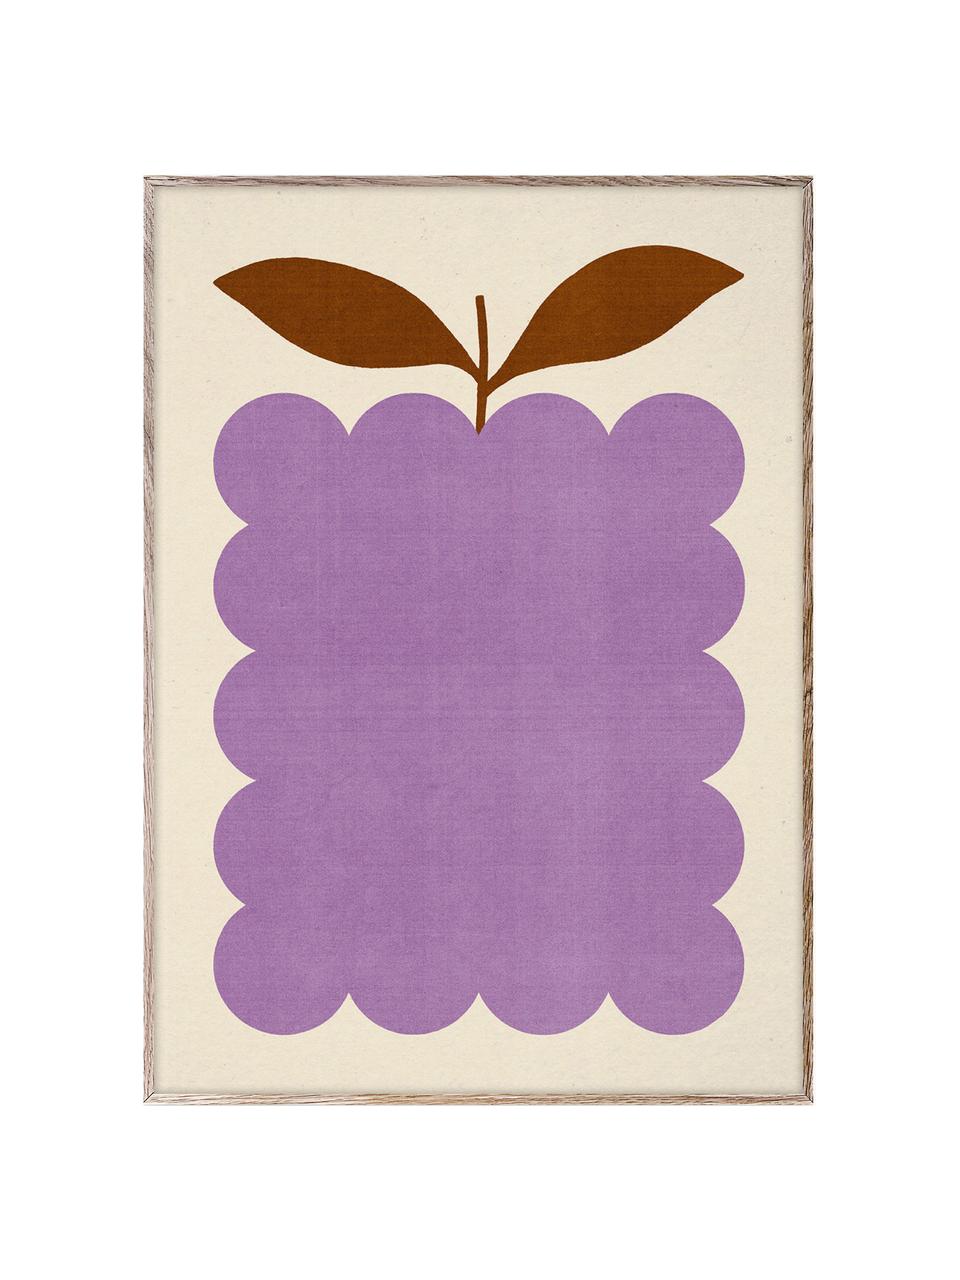 Poster Lilac Berry, 210 g mat Hahnemühle papier, digitale print met 10 UV-bestendige kleuren, Lila, lichtbeige, B 30 x H 40 cm